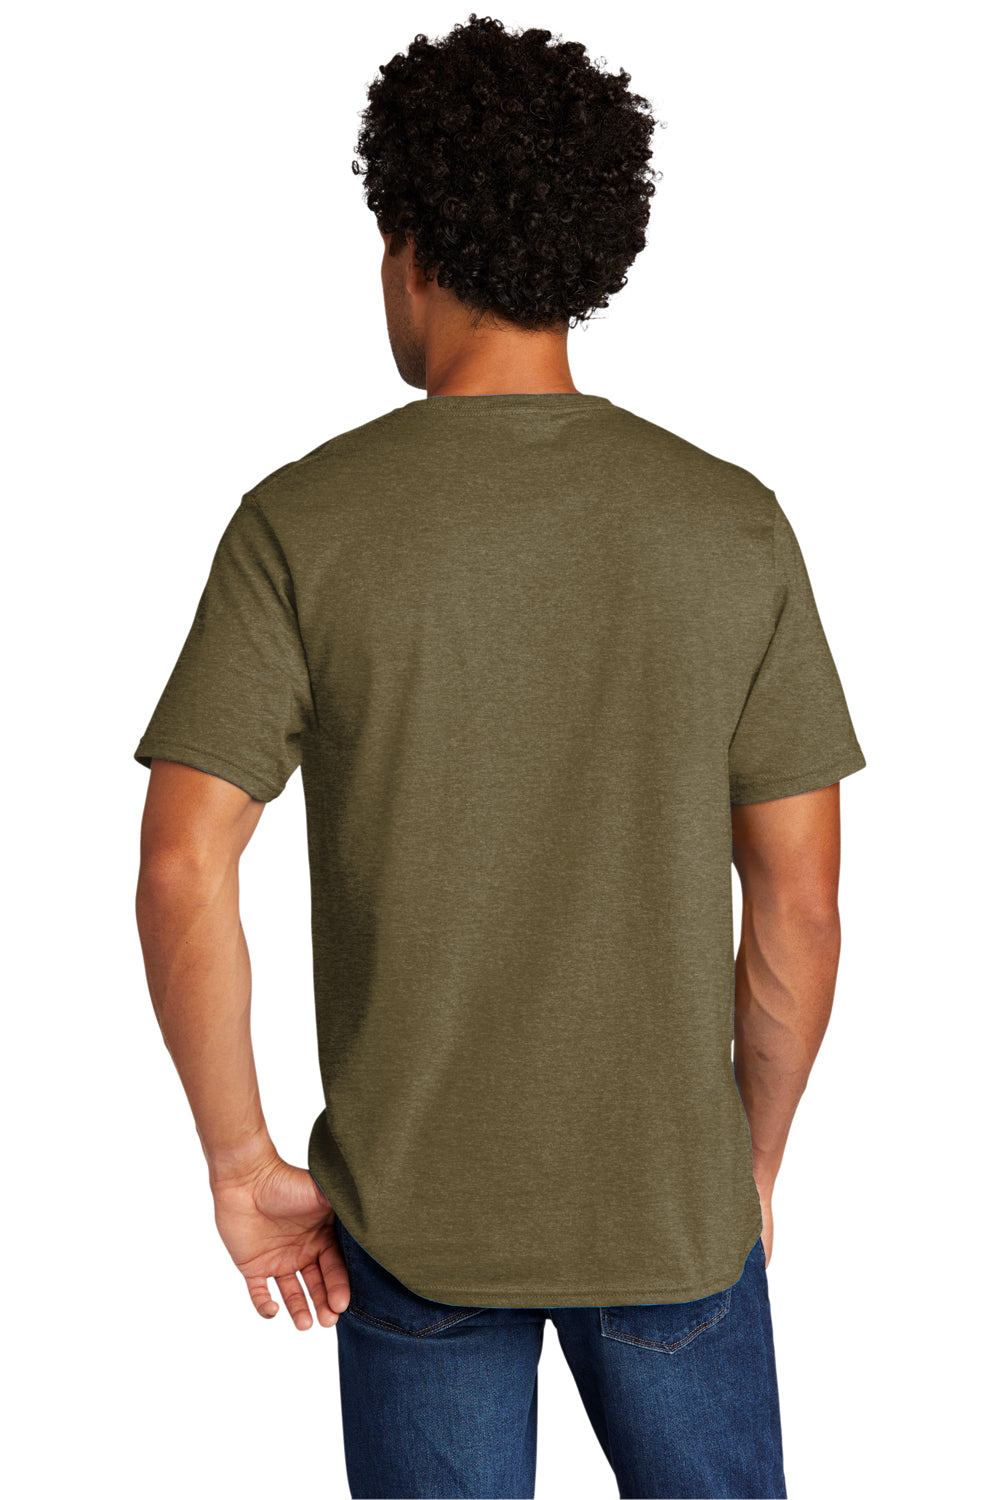 Port & Company Mens Short Sleeve Crewneck T-Shirt Heather Coyote Brown Side